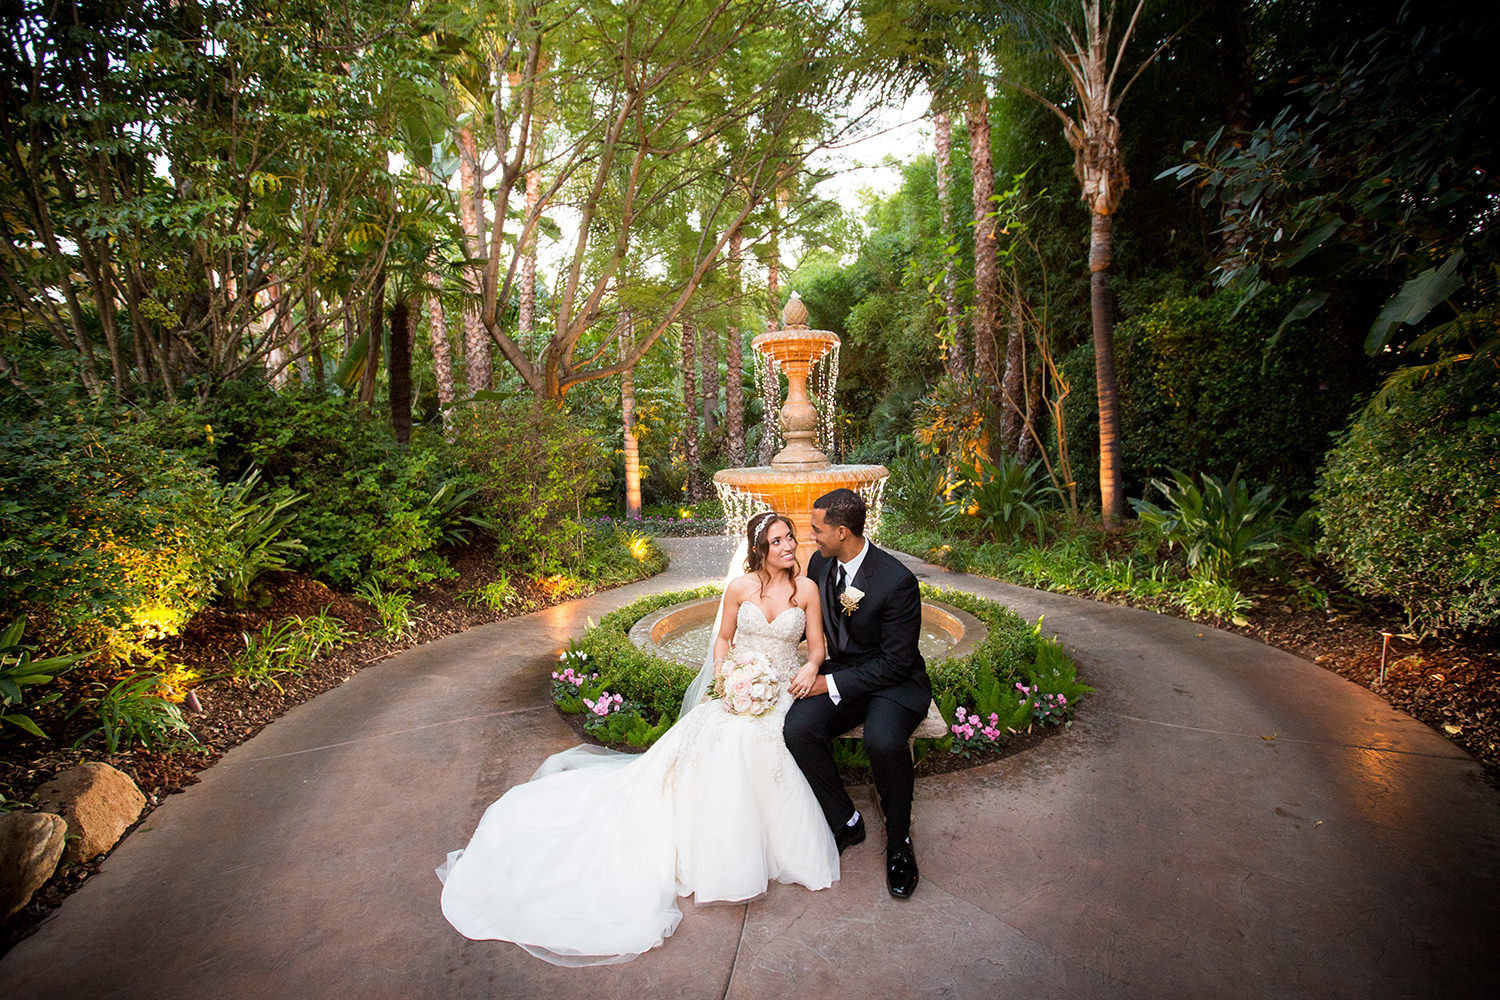 Scenic wedding portrait at Grand Tradition Garden Estates